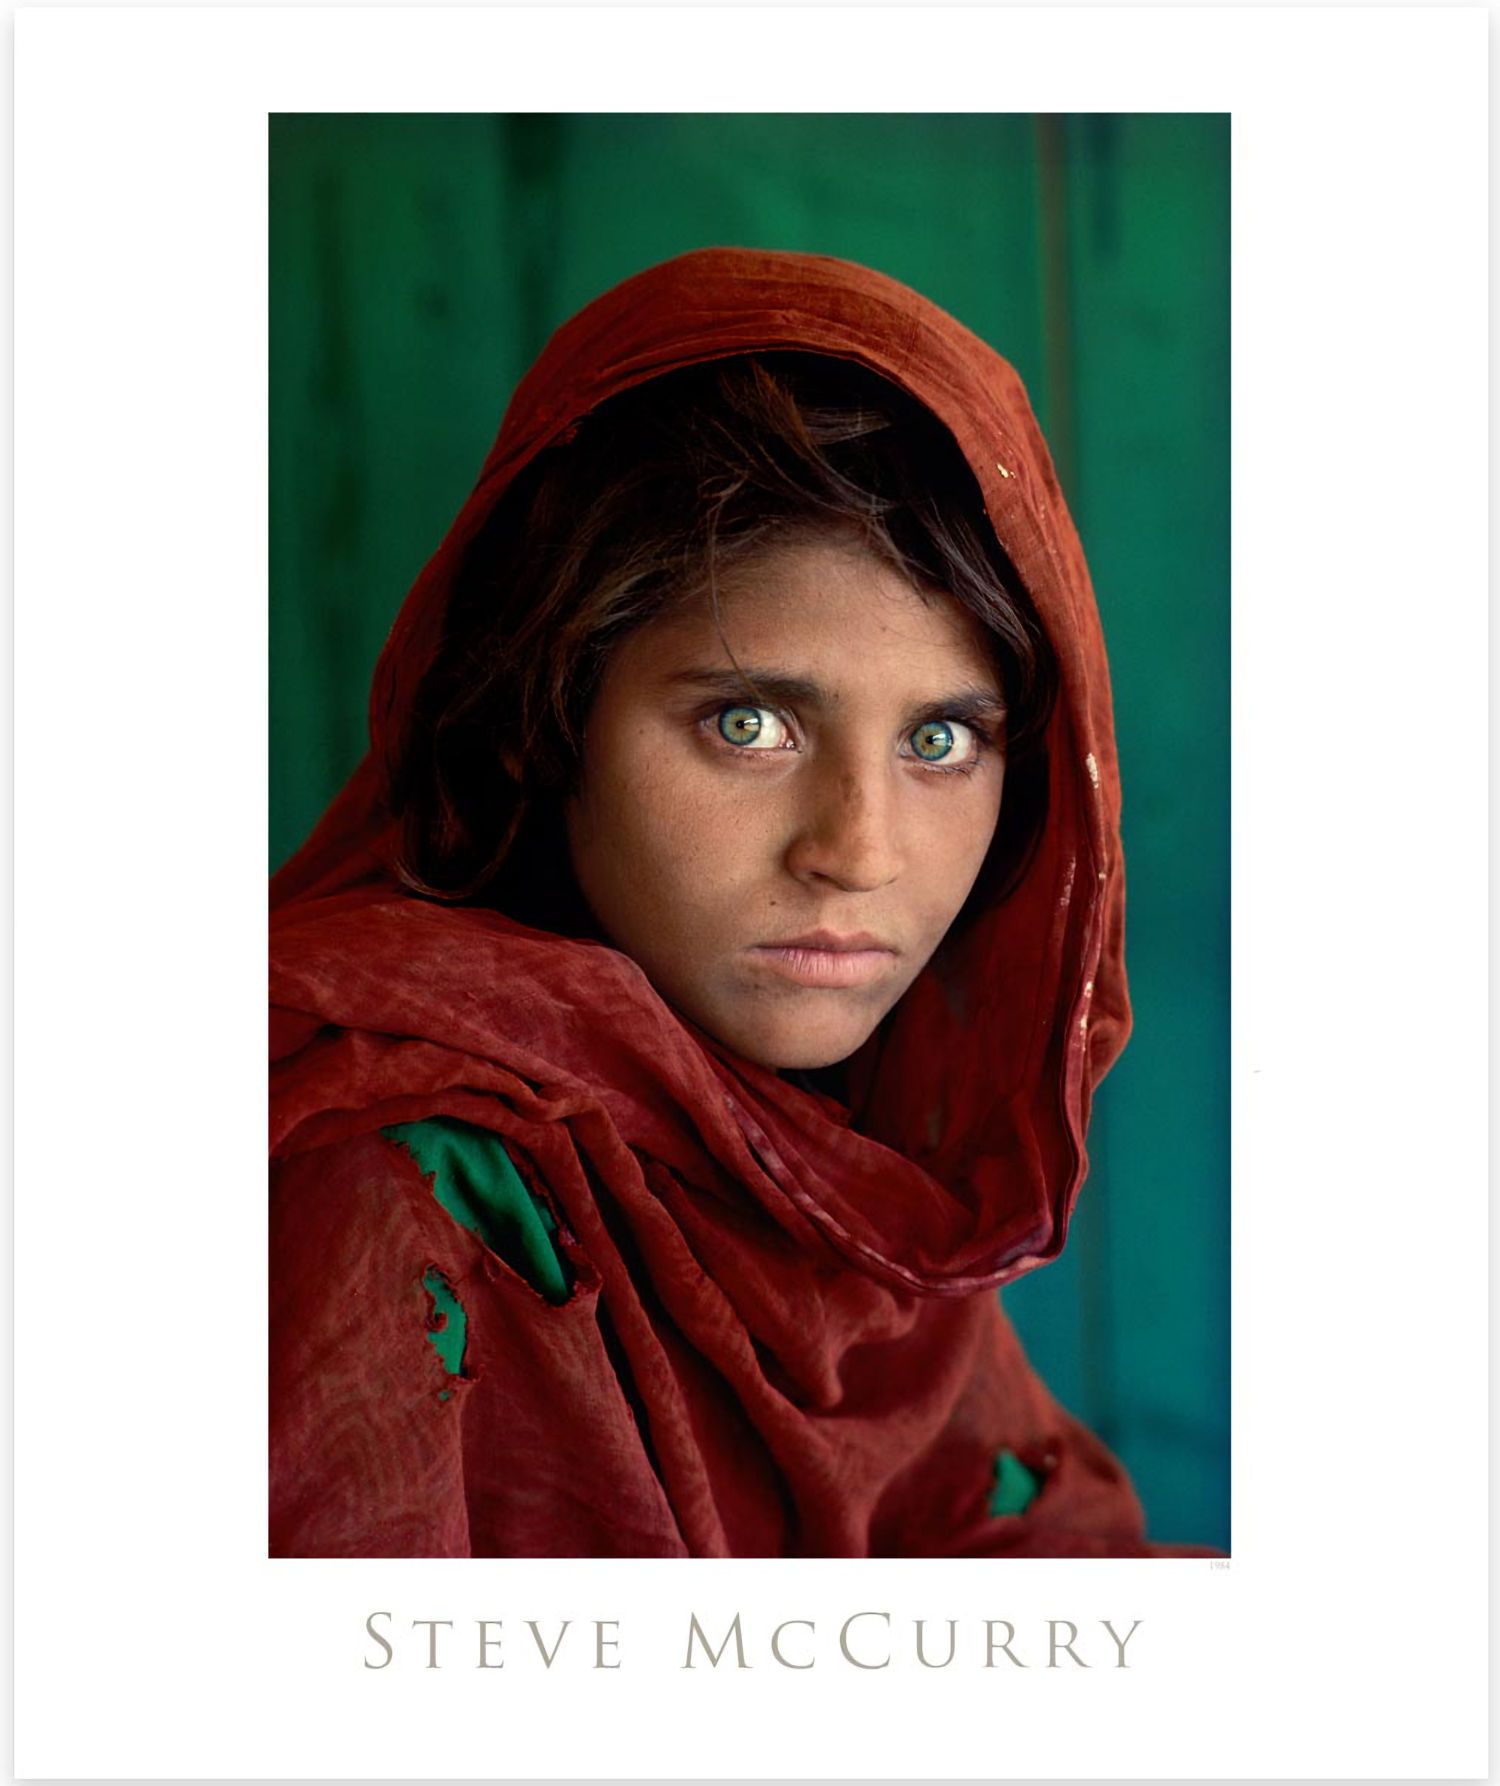 Steve McCurry Steve McCurry

Afghan Girl

Impression sur papier affiche

Dimensi&hellip;